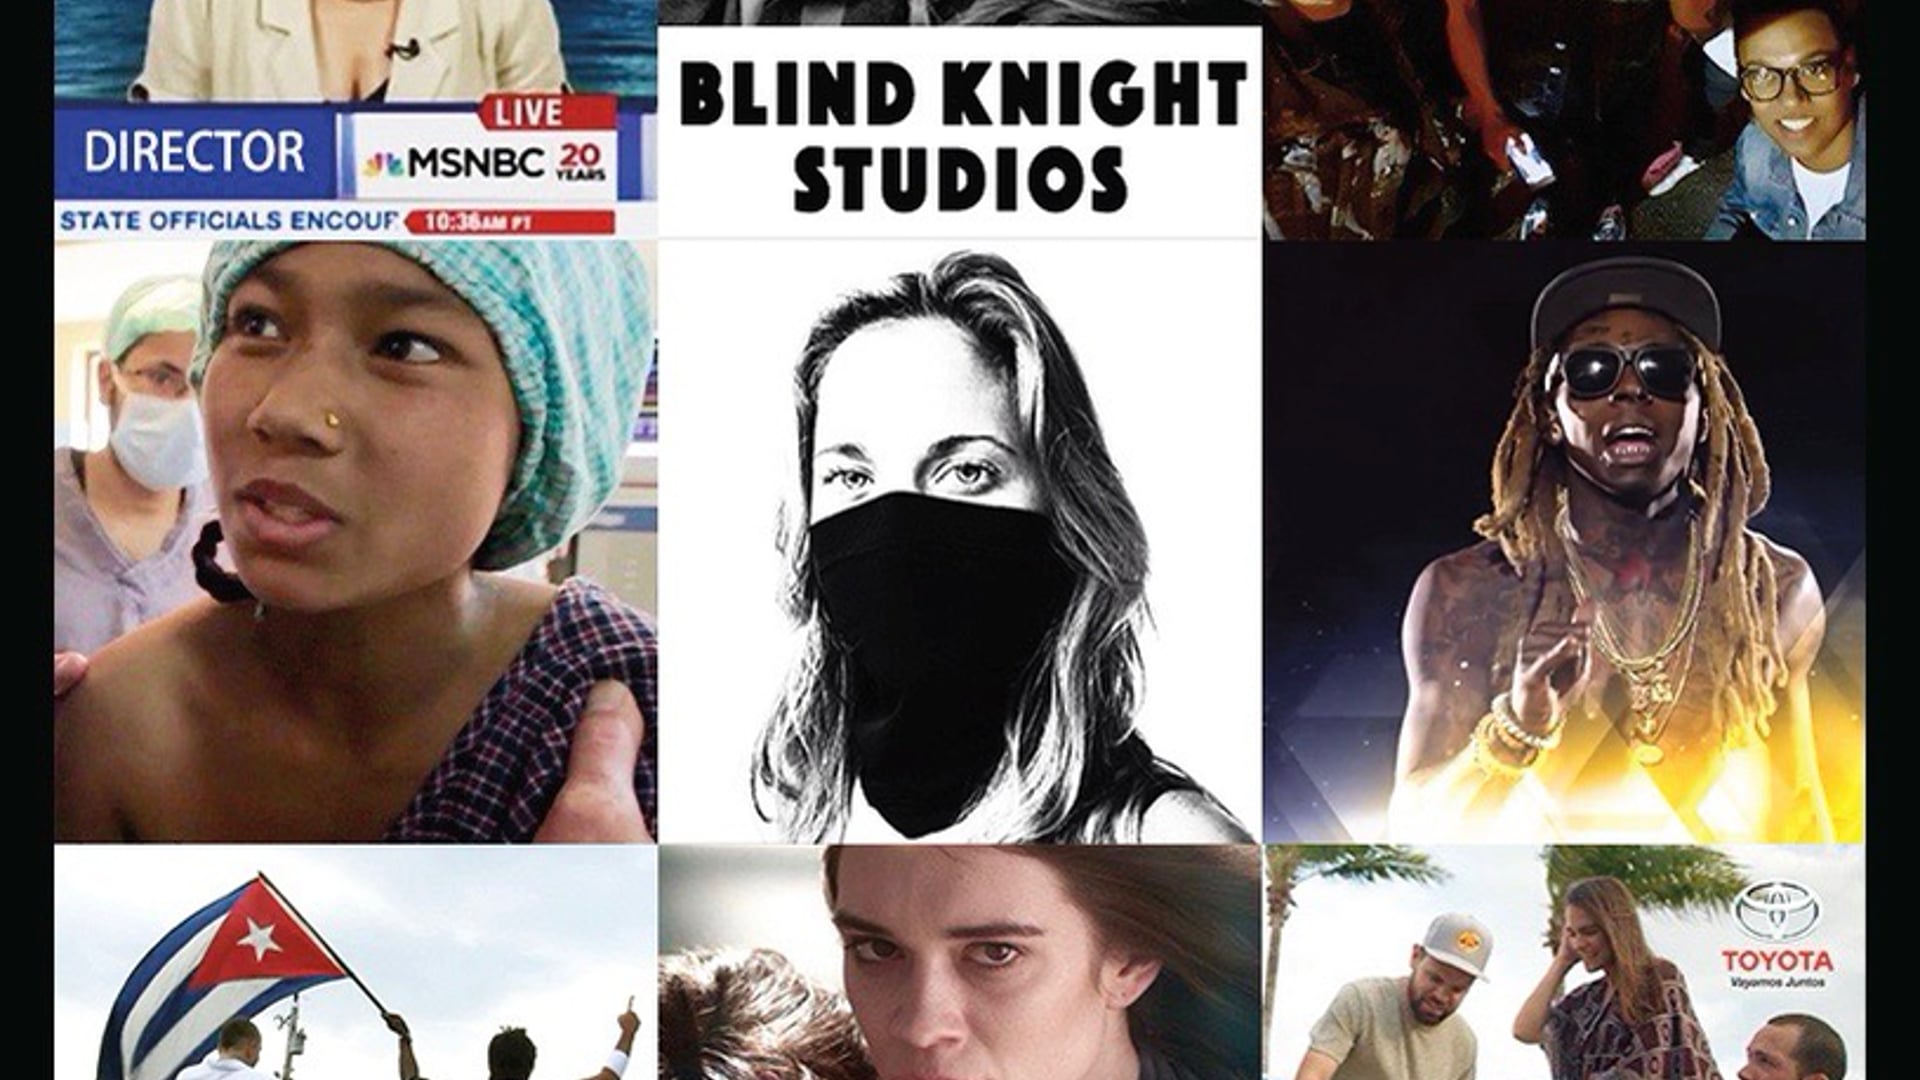 BLIND KNIGHT STUDIOS REEL